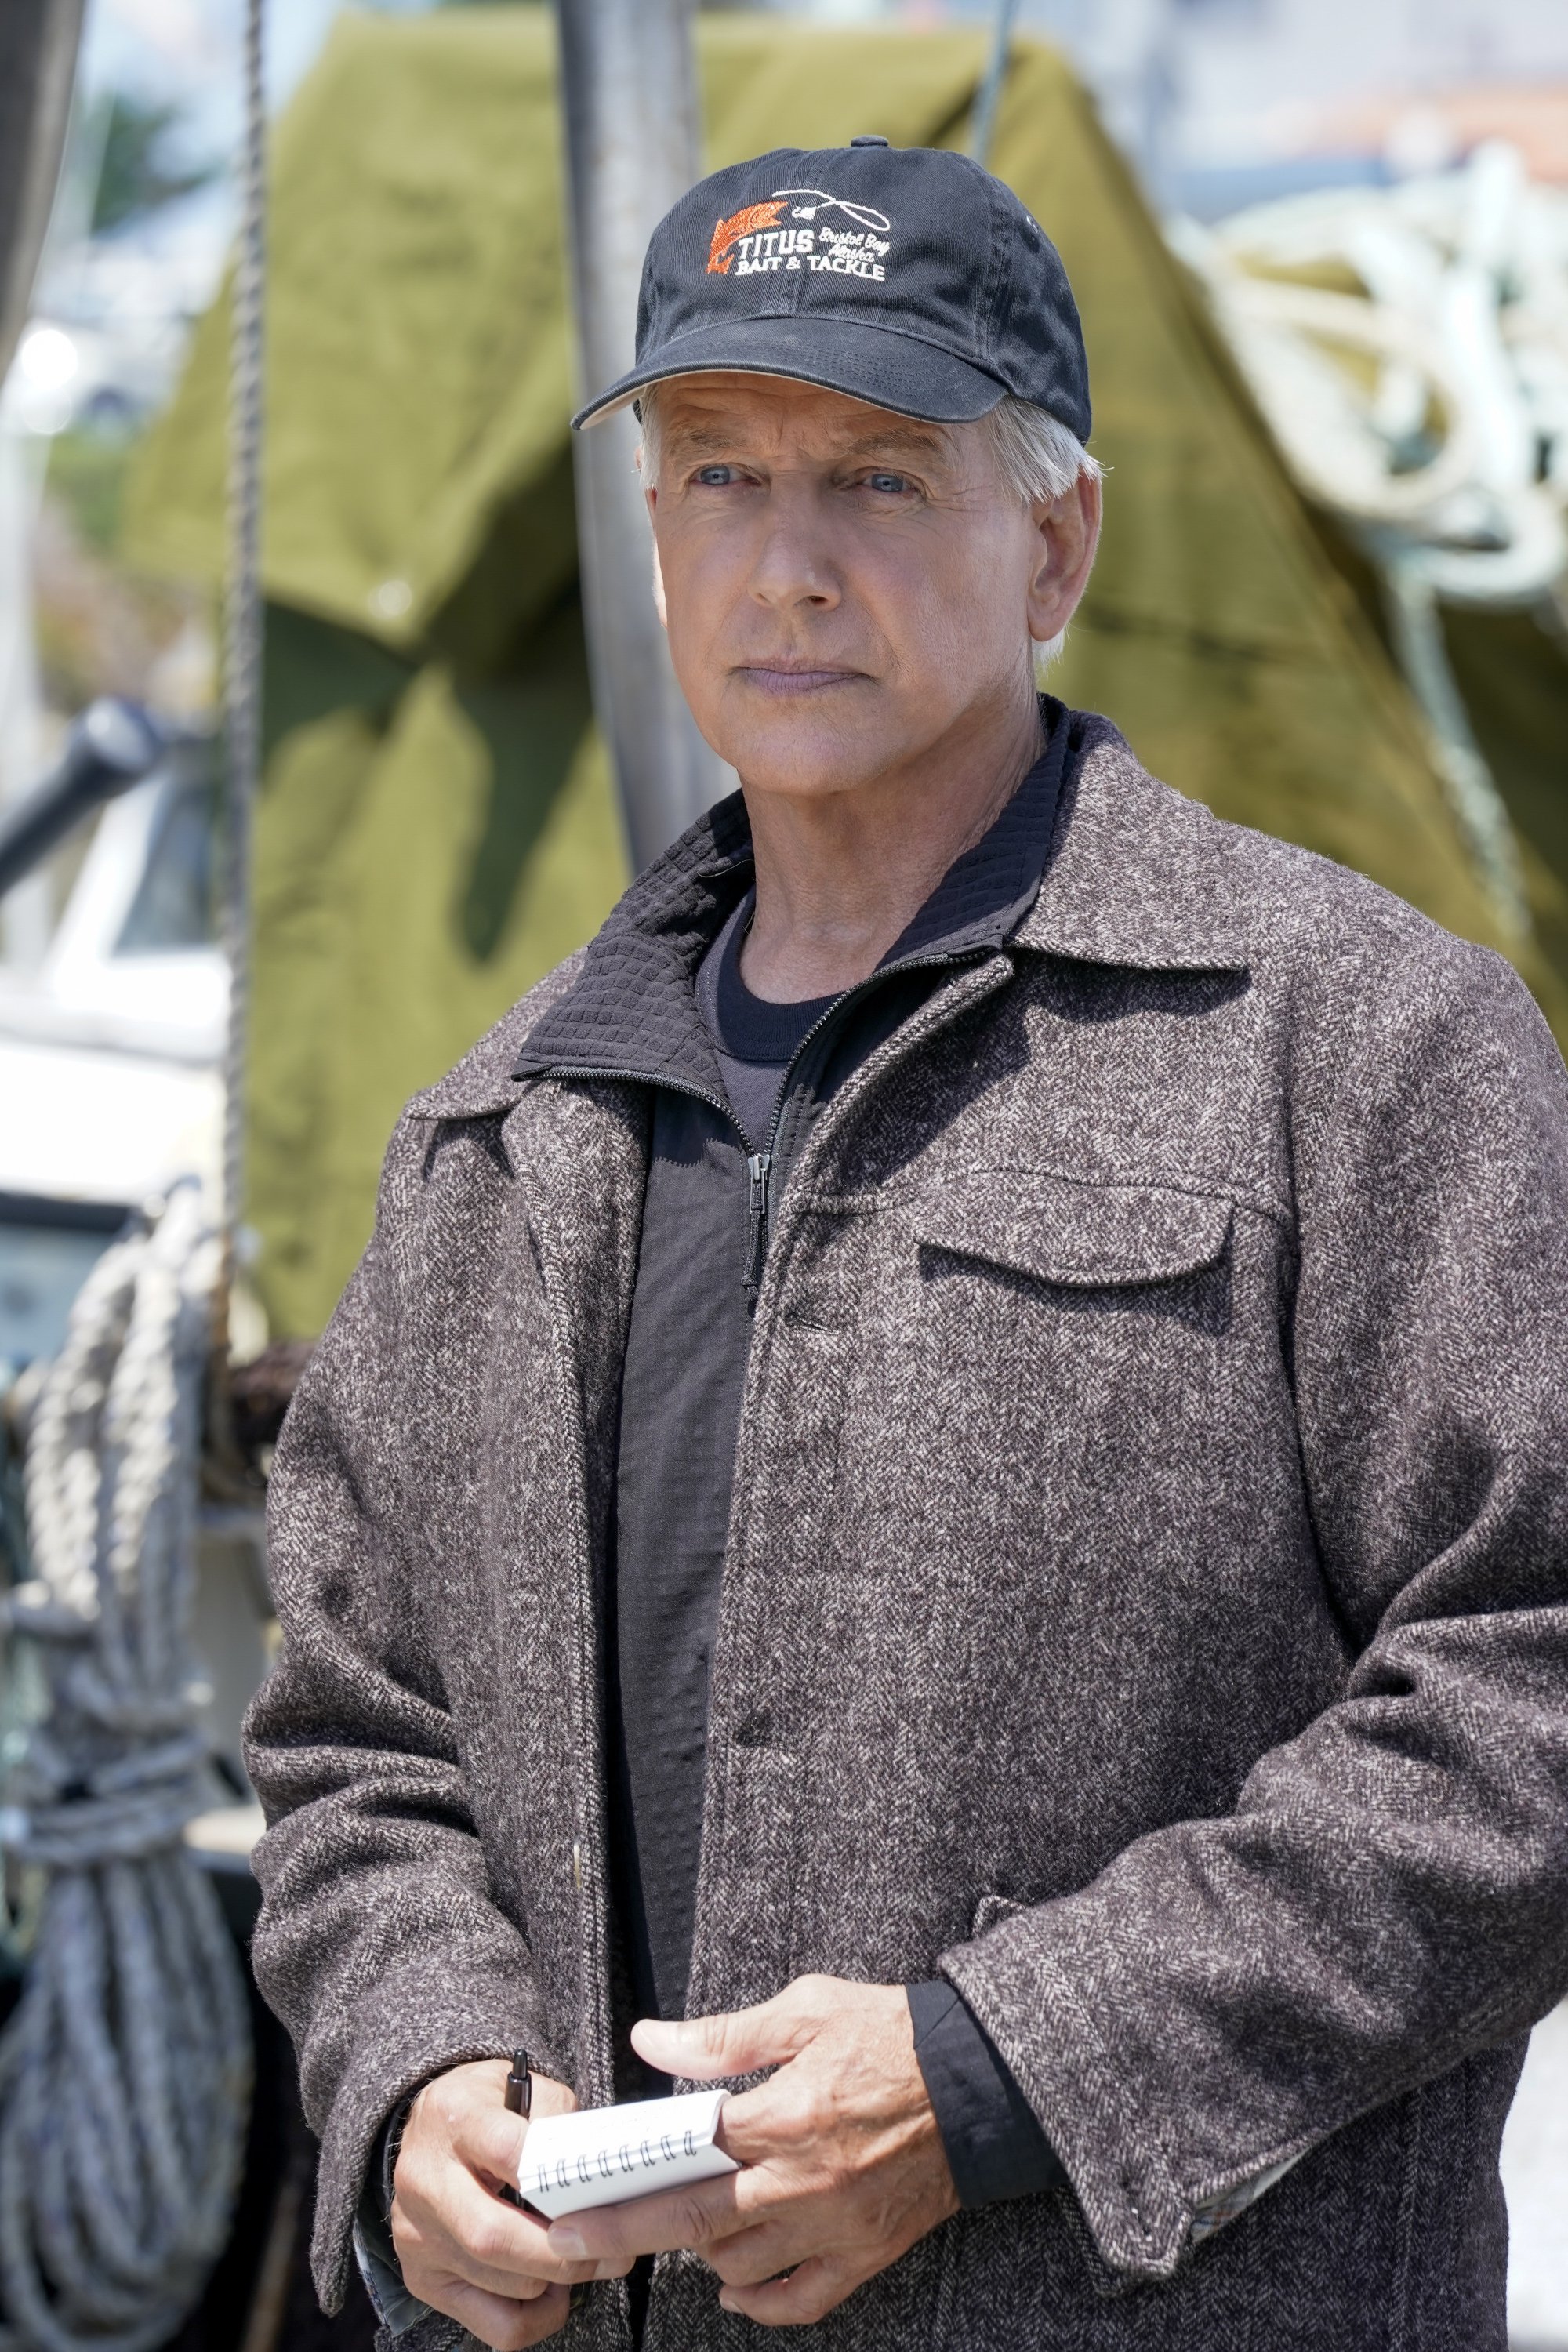 Mark Harmon as NCIS Special Agent Leroy Jethro Gibbs on "NCIS" | Photo: Cliff Lipson/CBS via Getty Images